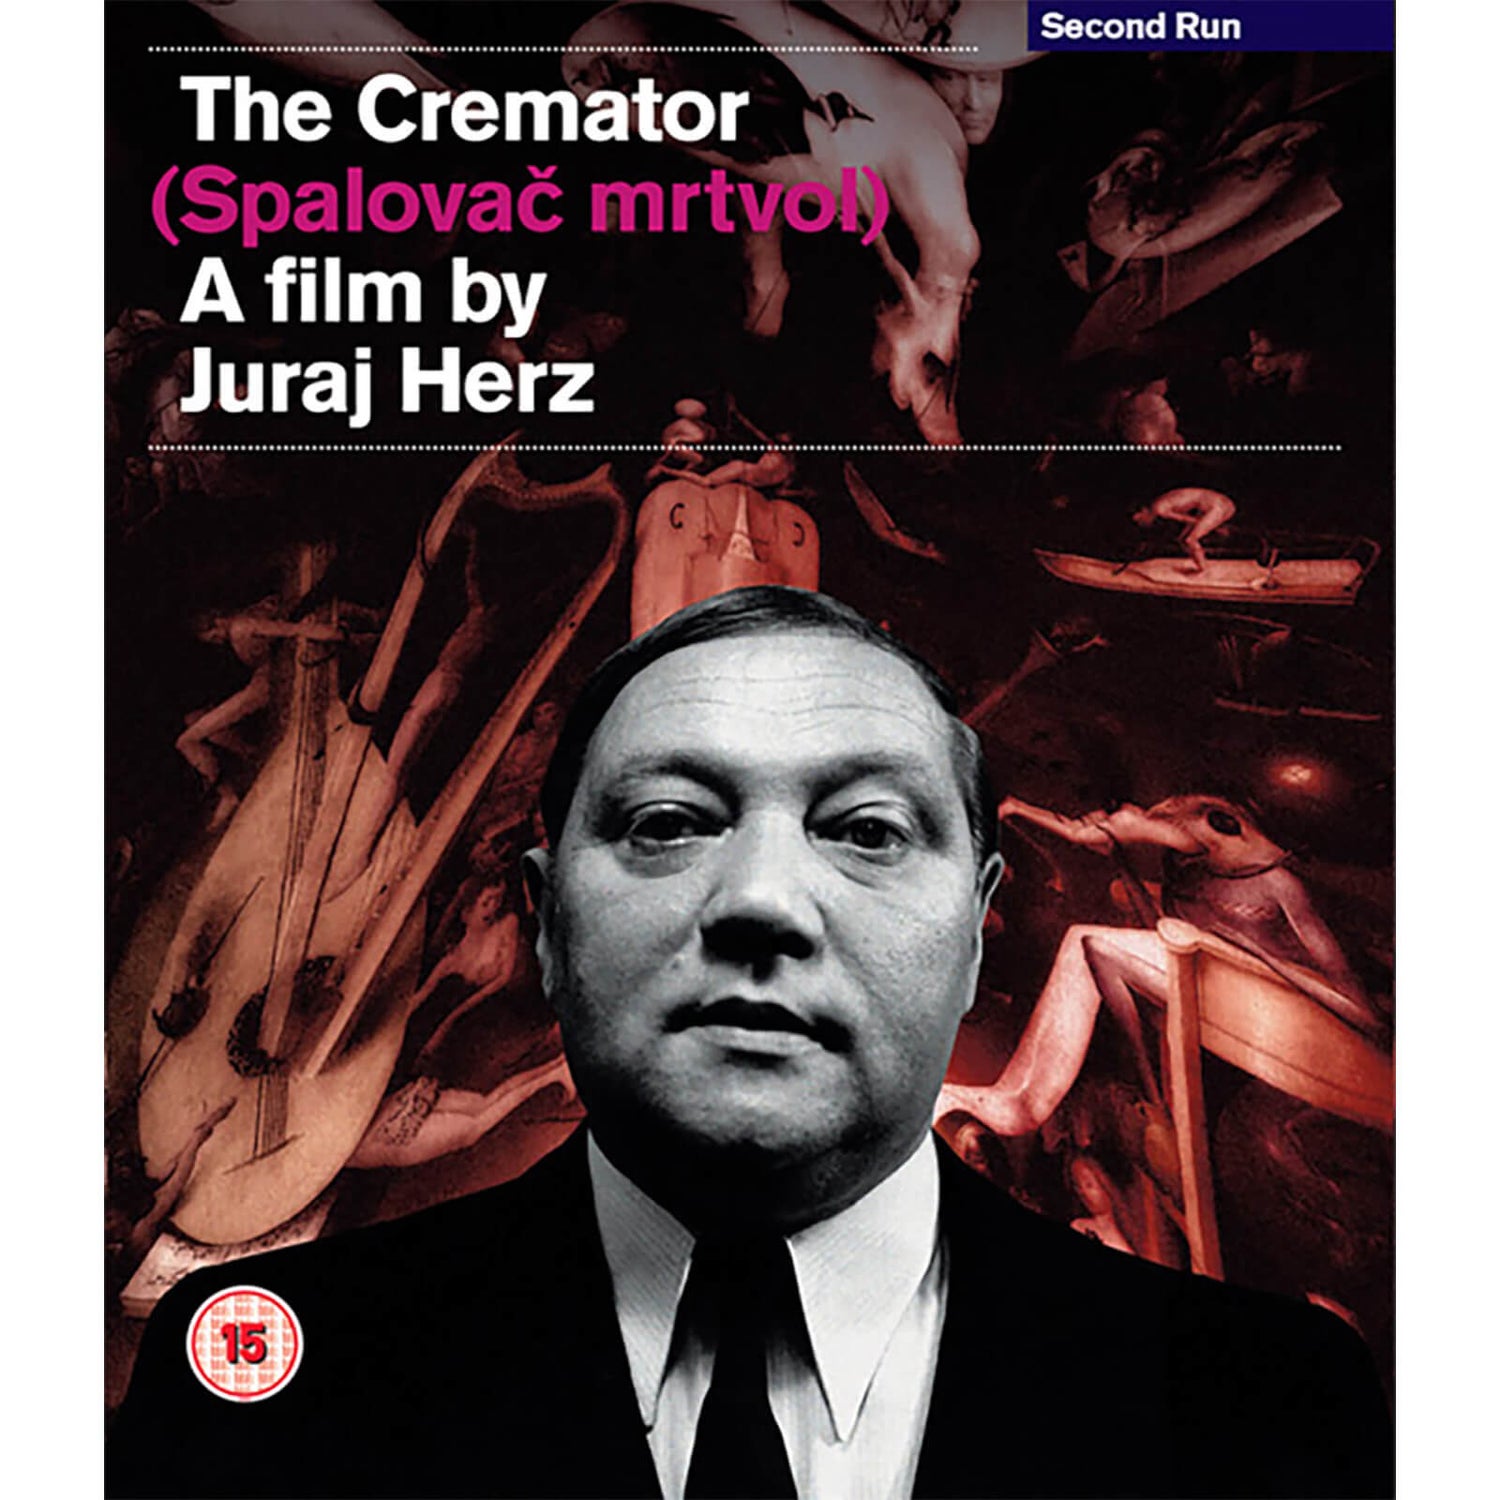 The Cremator Blu-ray